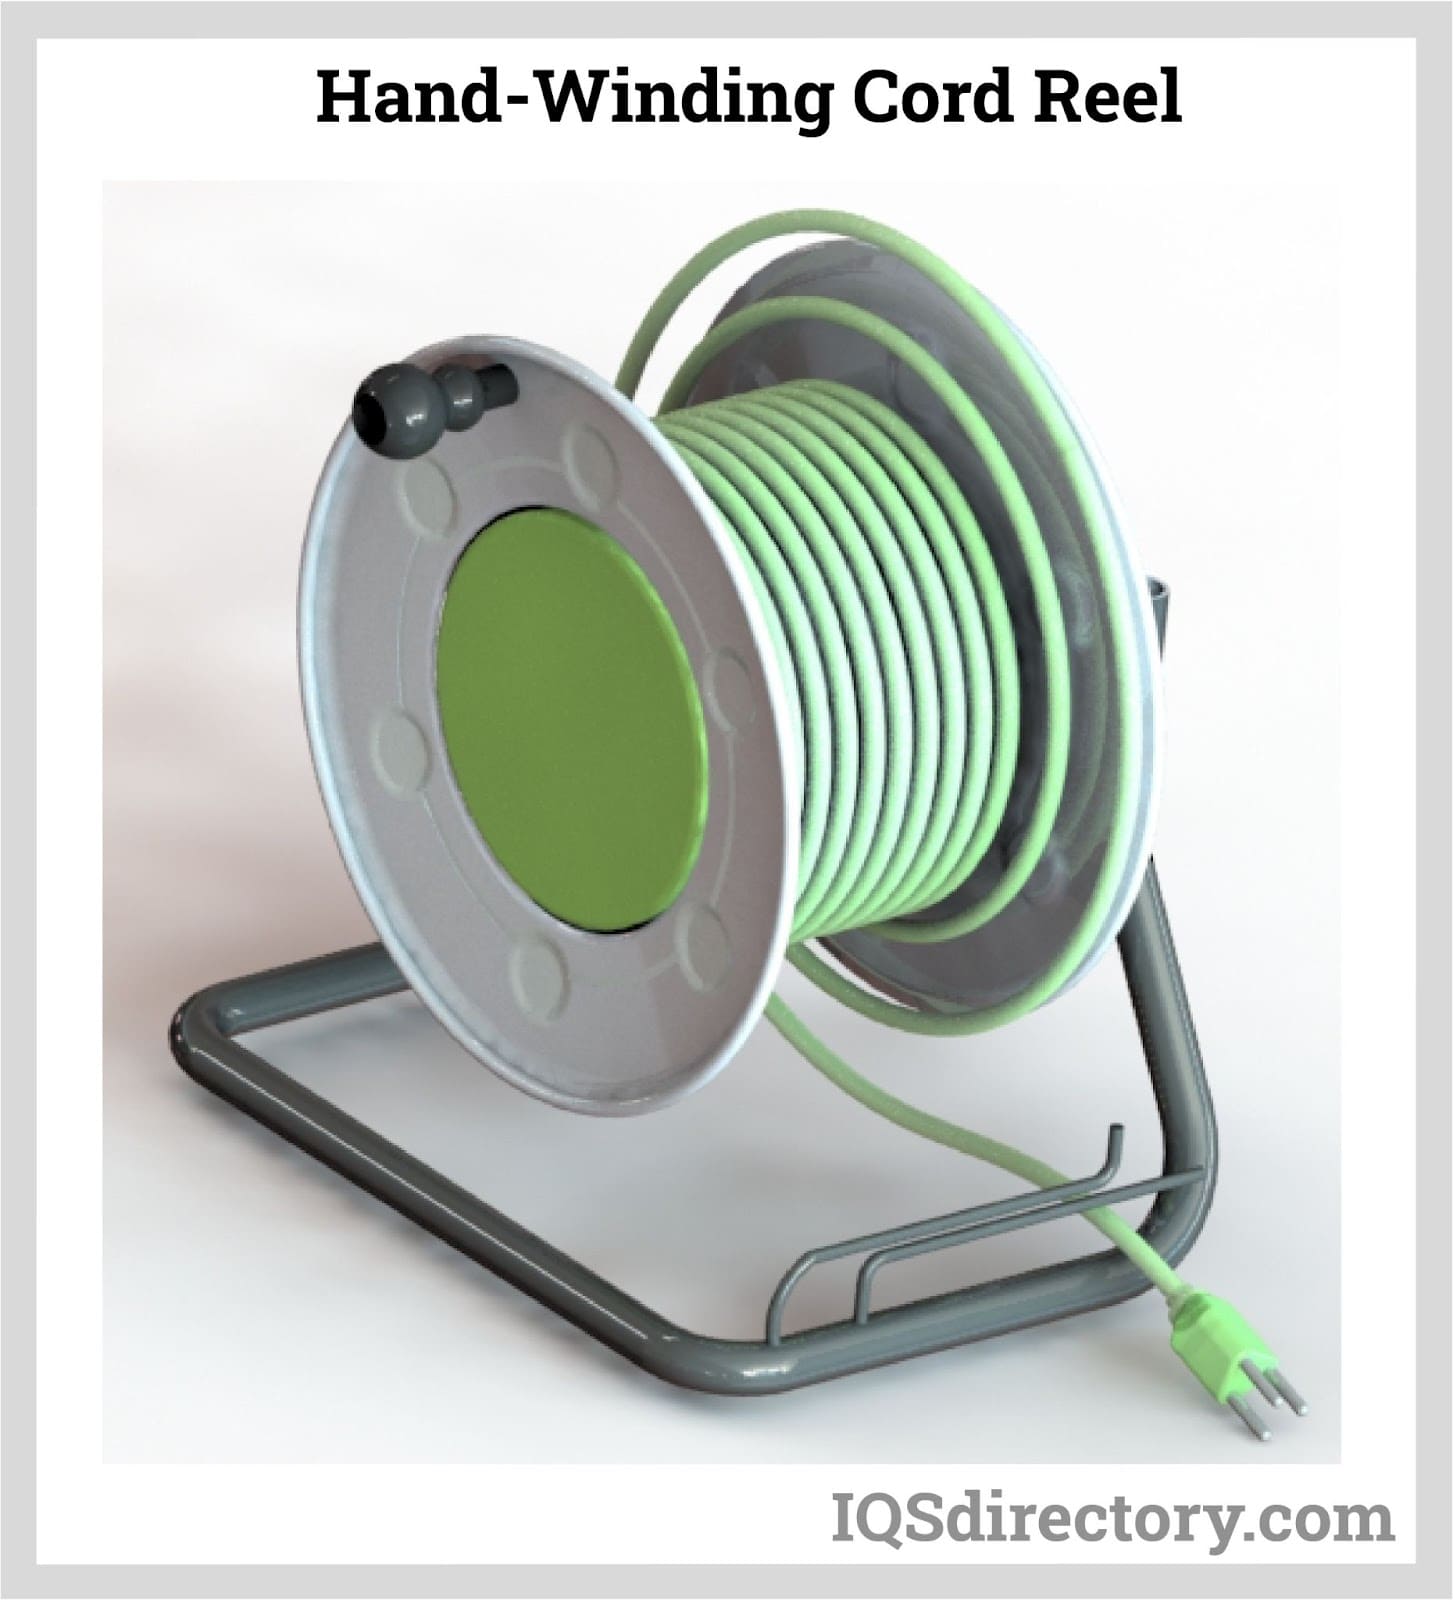 Hand-Winding Cord Reel